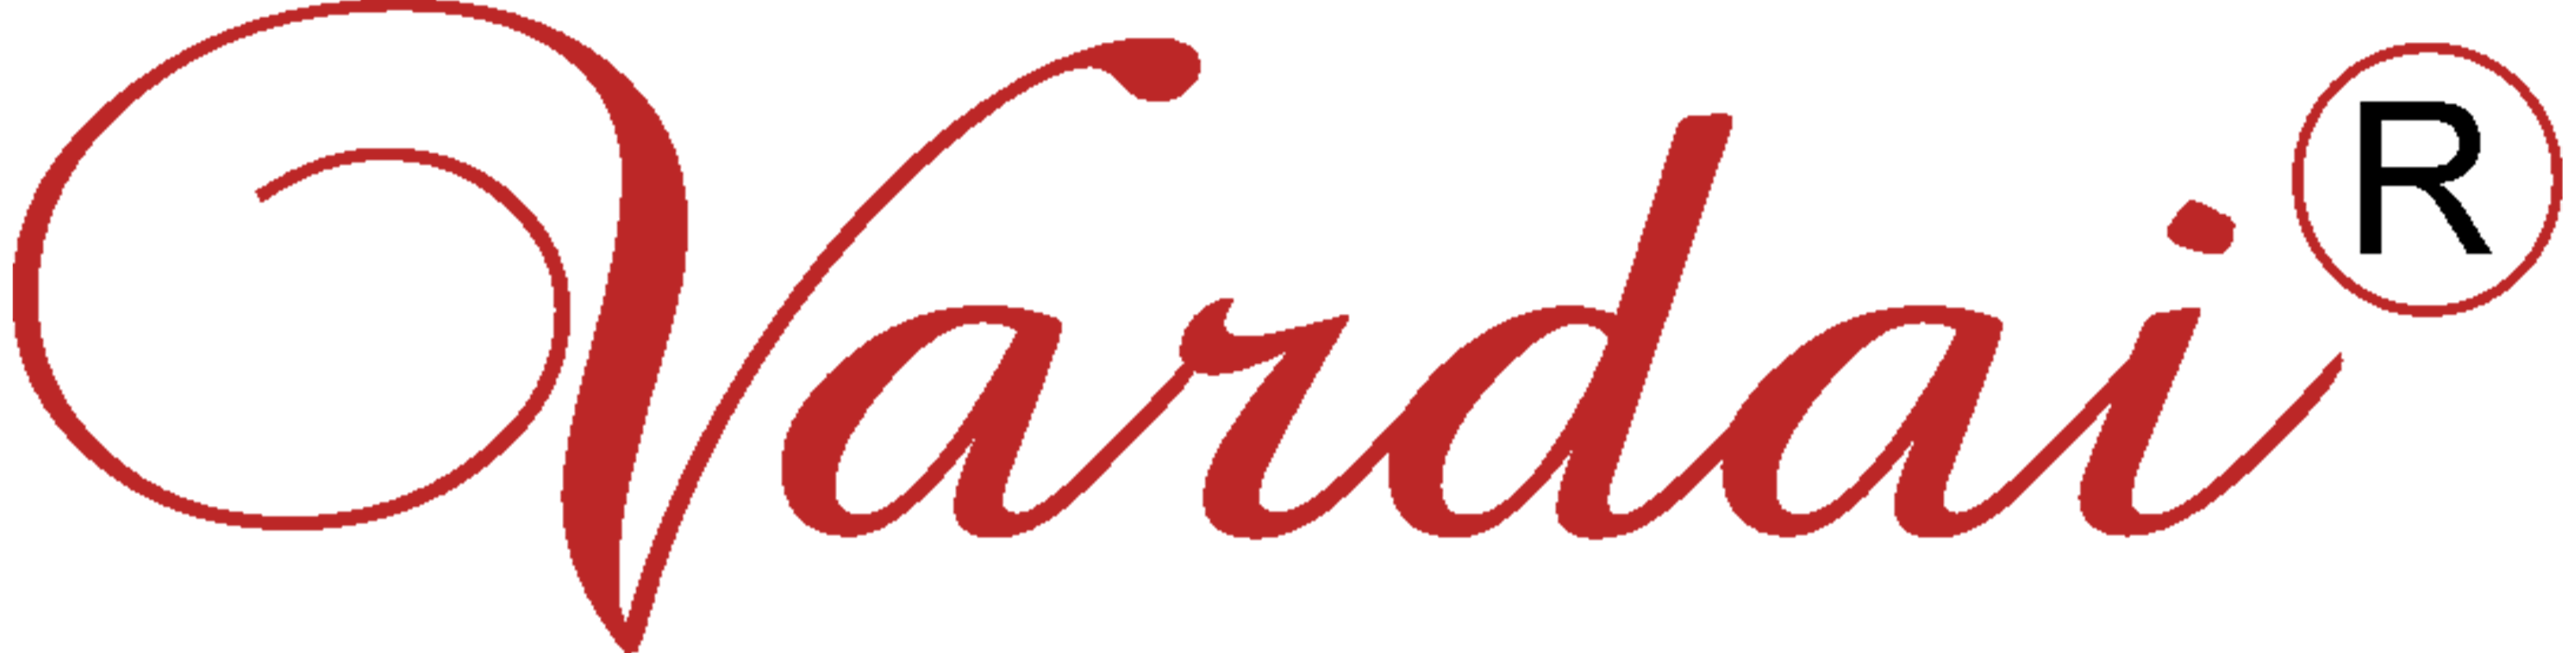 vardai-logo